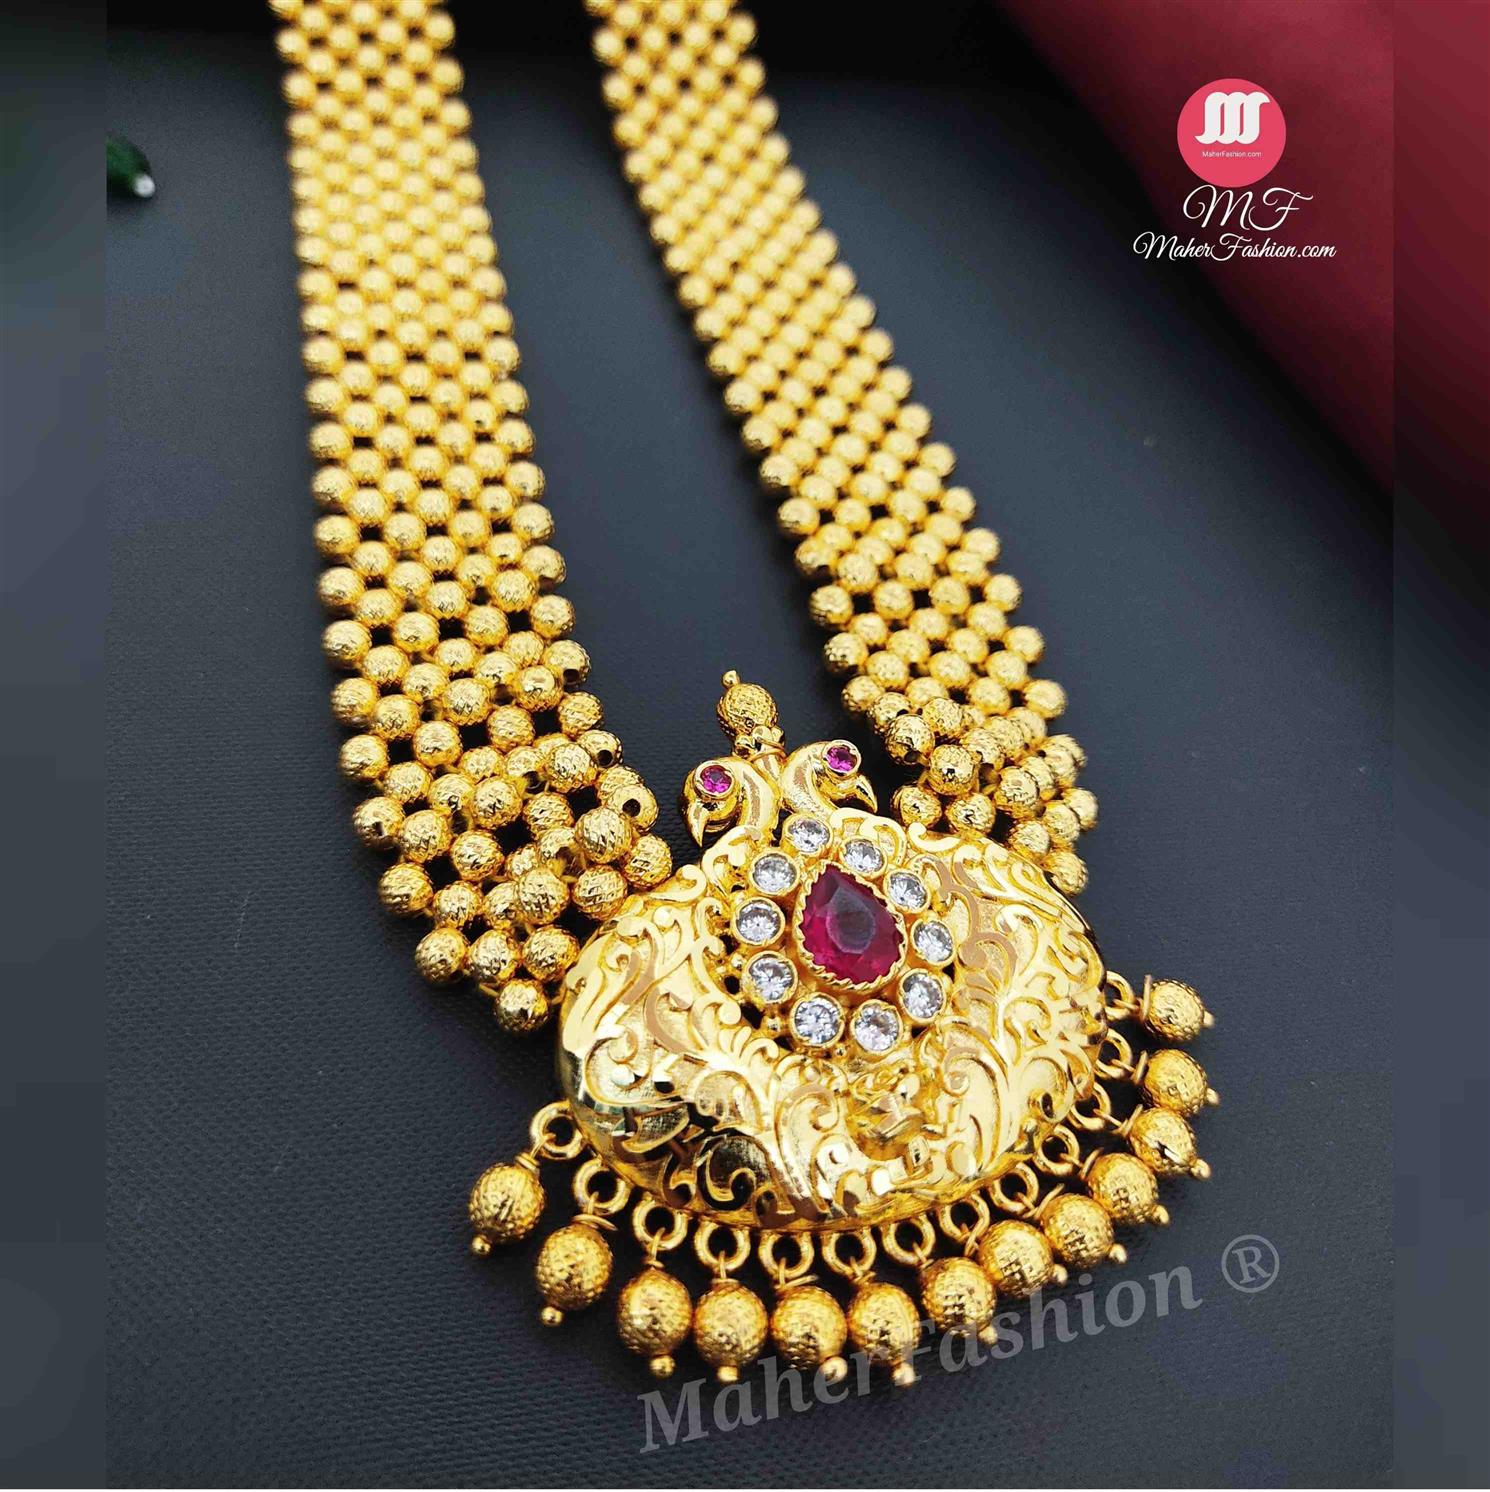 Golden Beads Bridal Long Necklace|Maherfashion